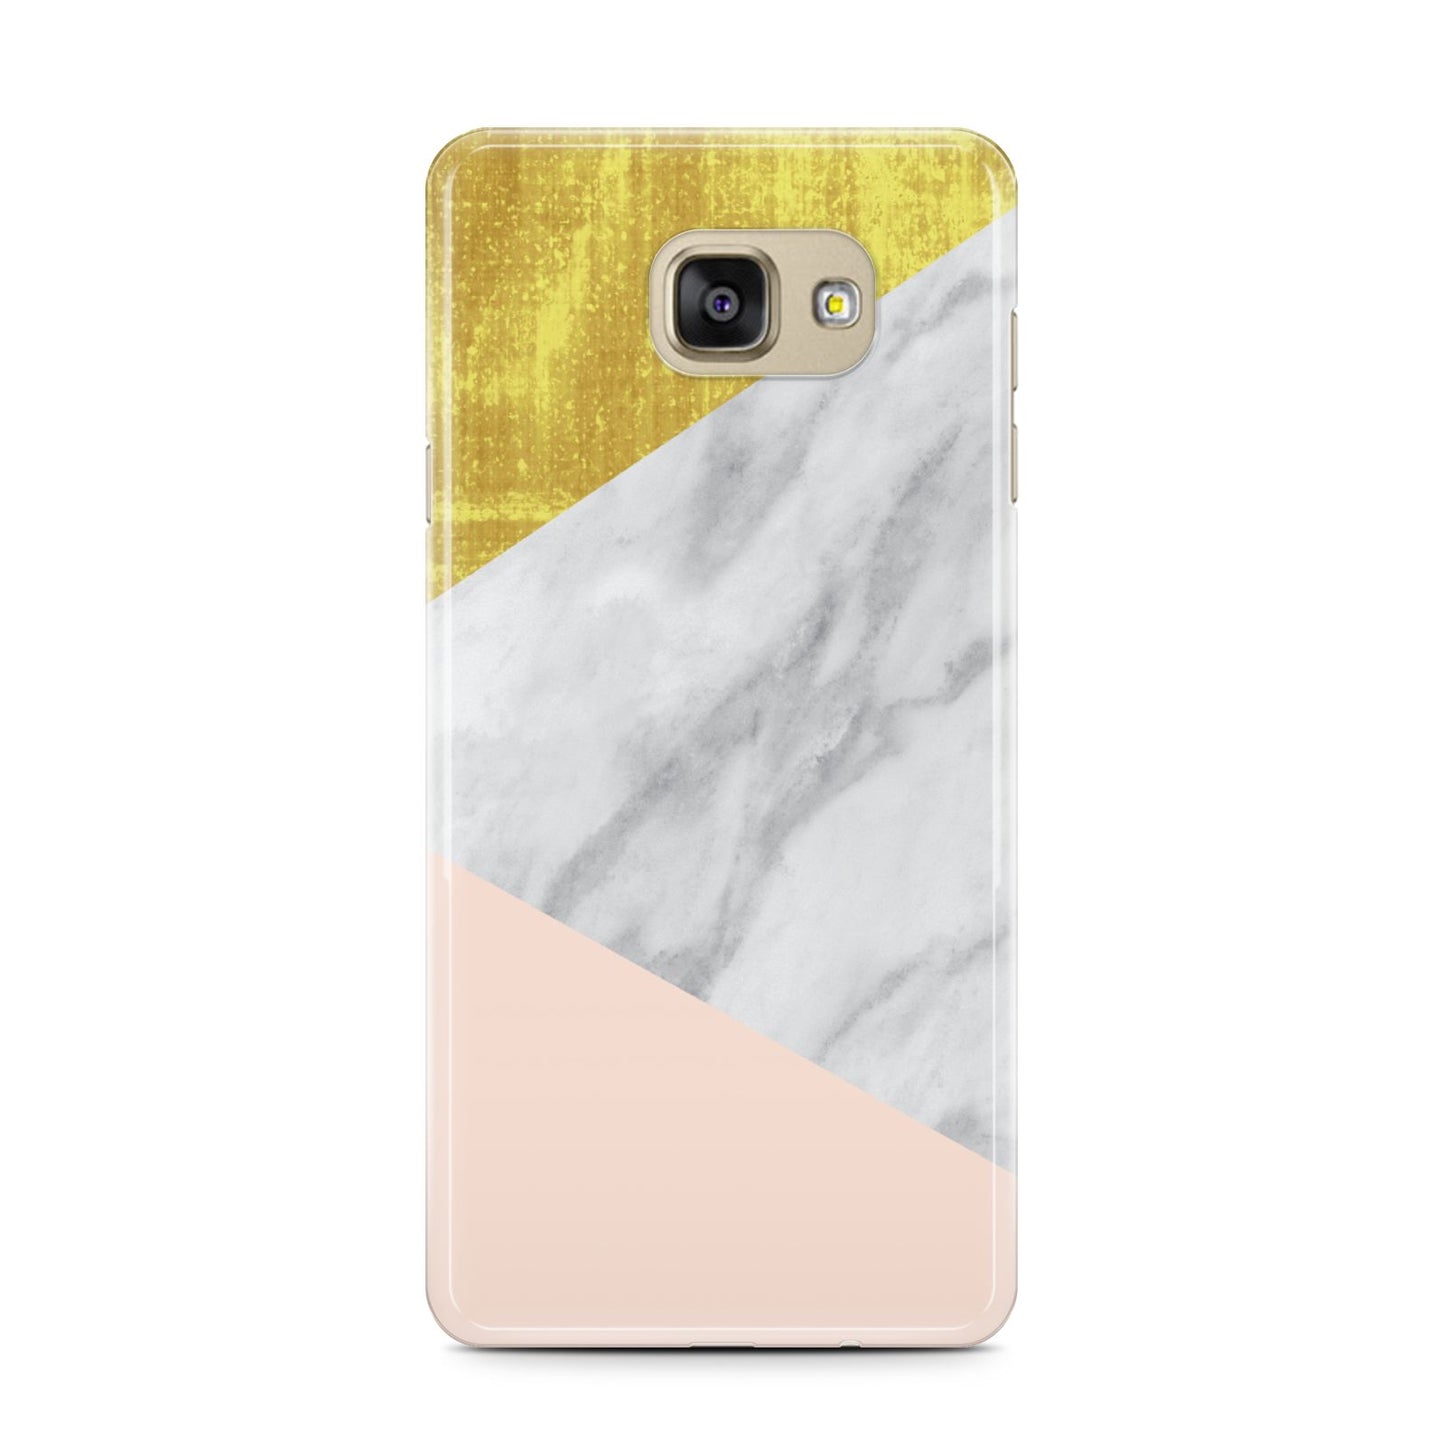 Marble White Gold Foil Peach Samsung Galaxy A7 2016 Case on gold phone